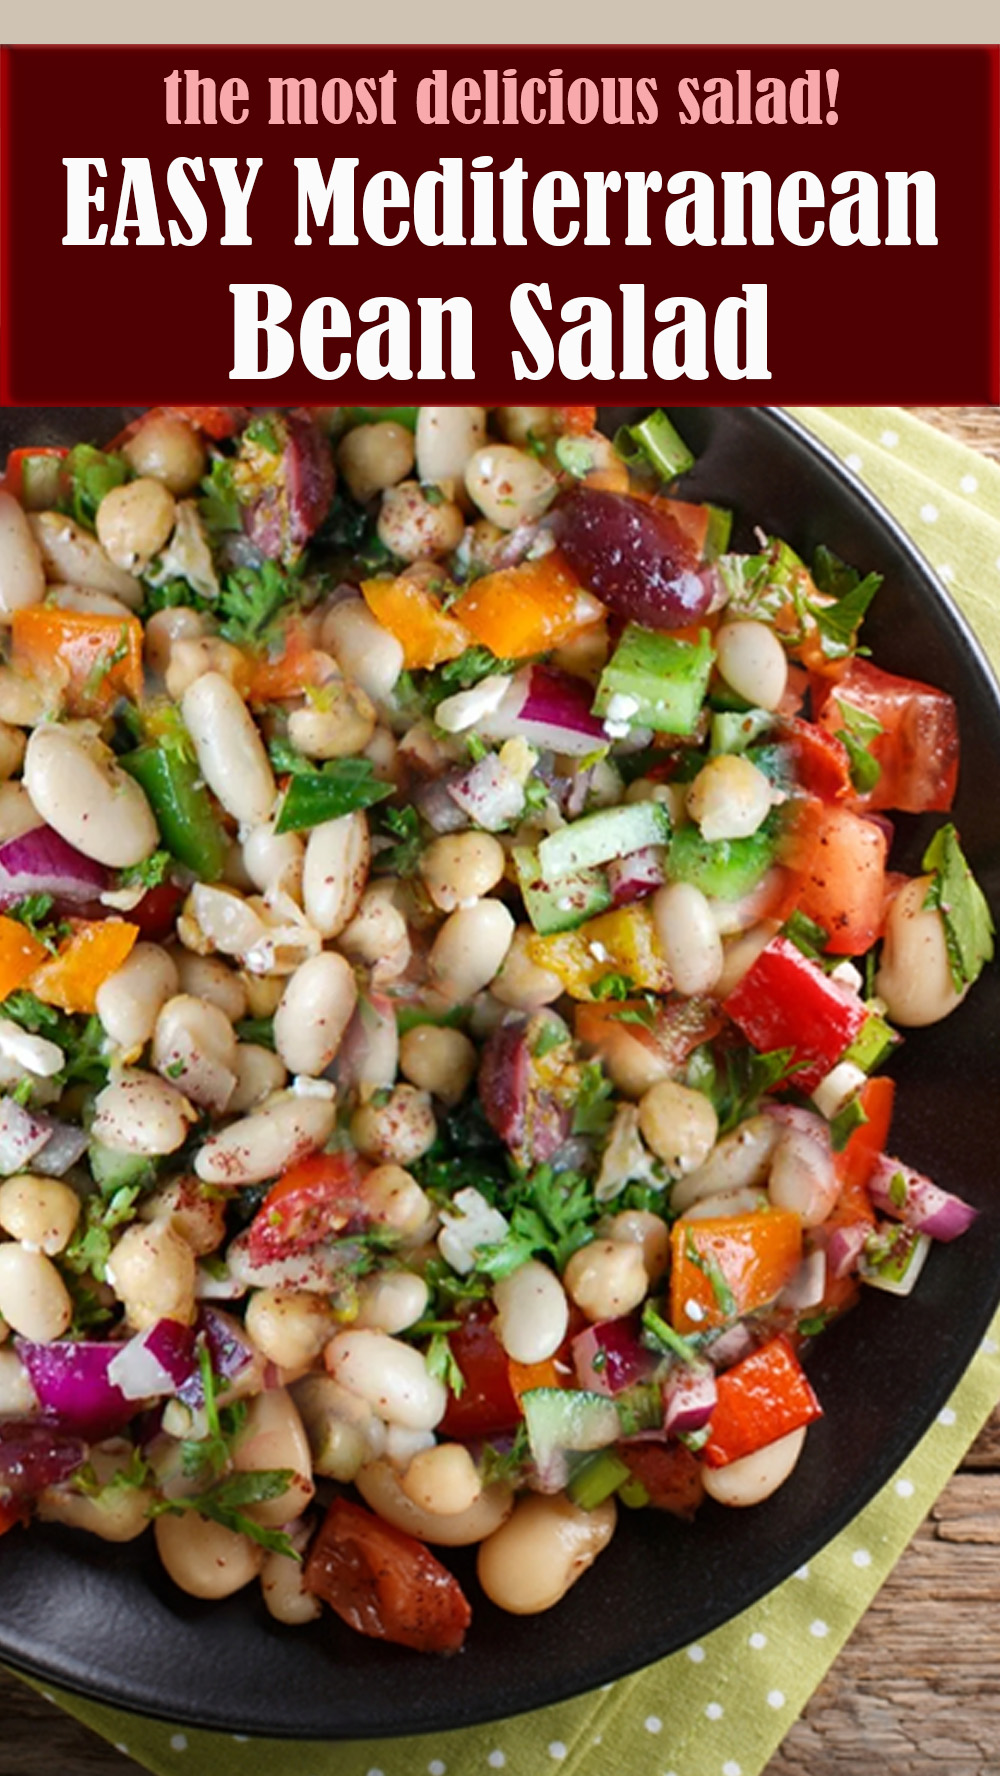 EASY Mediterranean Bean Salad